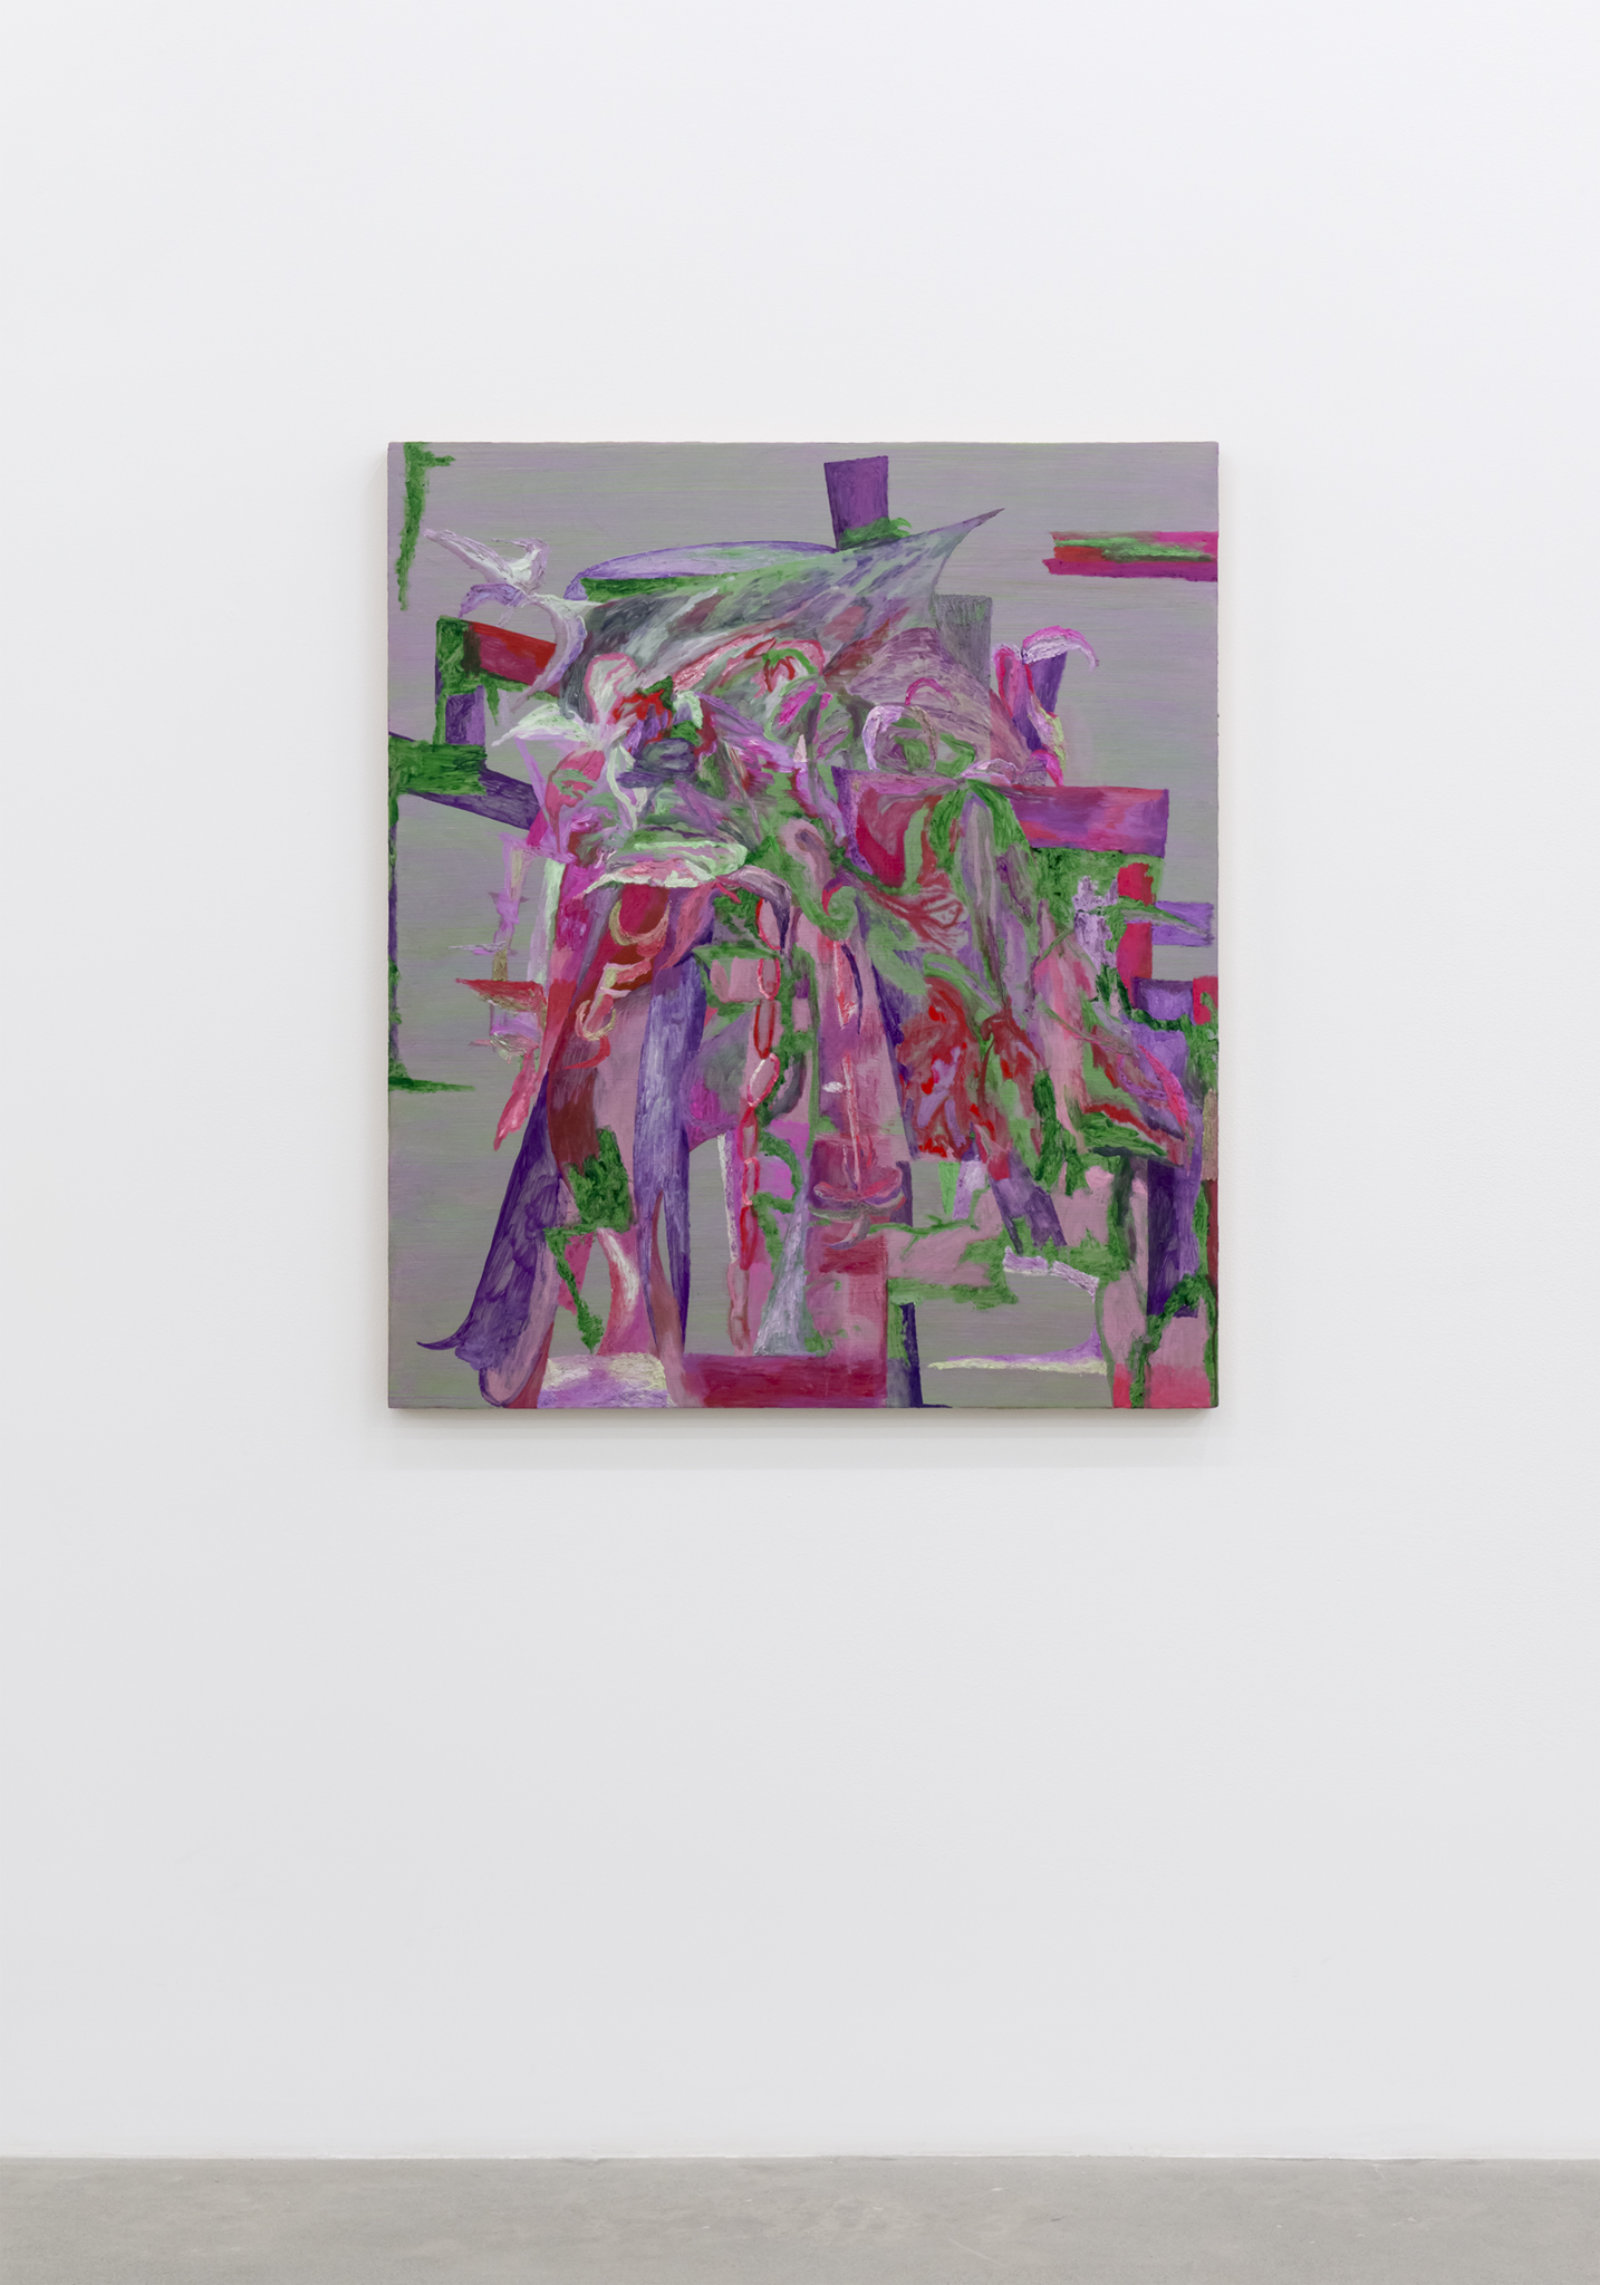 Rebecca Brewer, Flower Dumpster, 2018, oil on panel, 42 x 36 in. (107 x 92 cm)